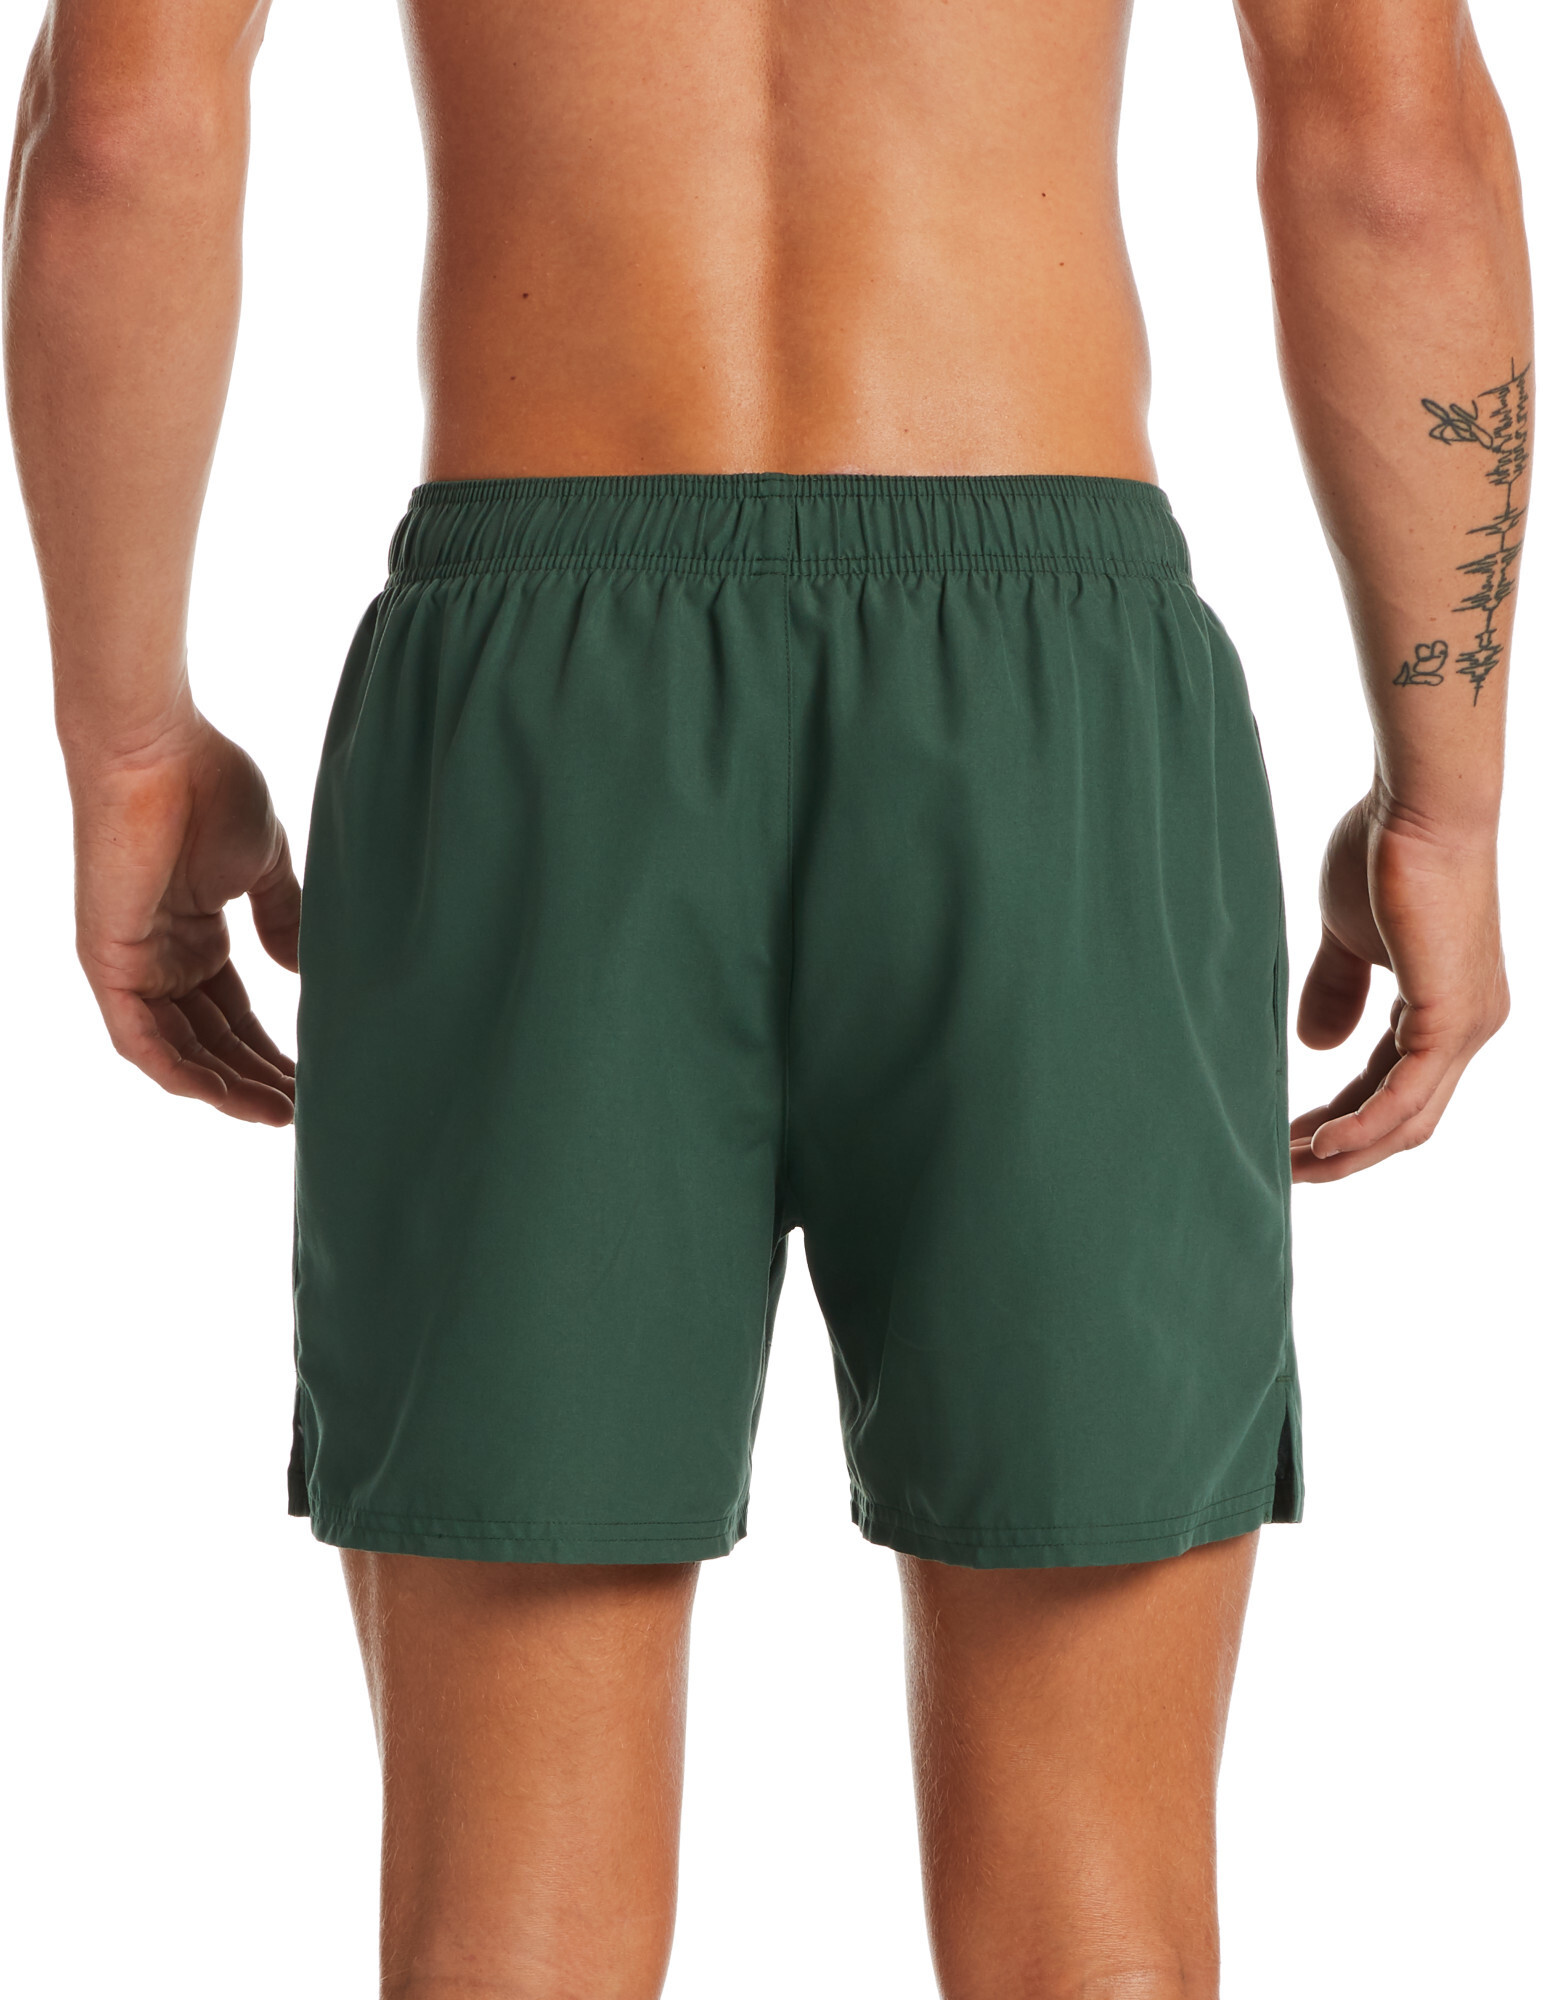 Nike Swim Essential Lap 5 Volley Shorts Men galactic jade | Bikester.co.uk